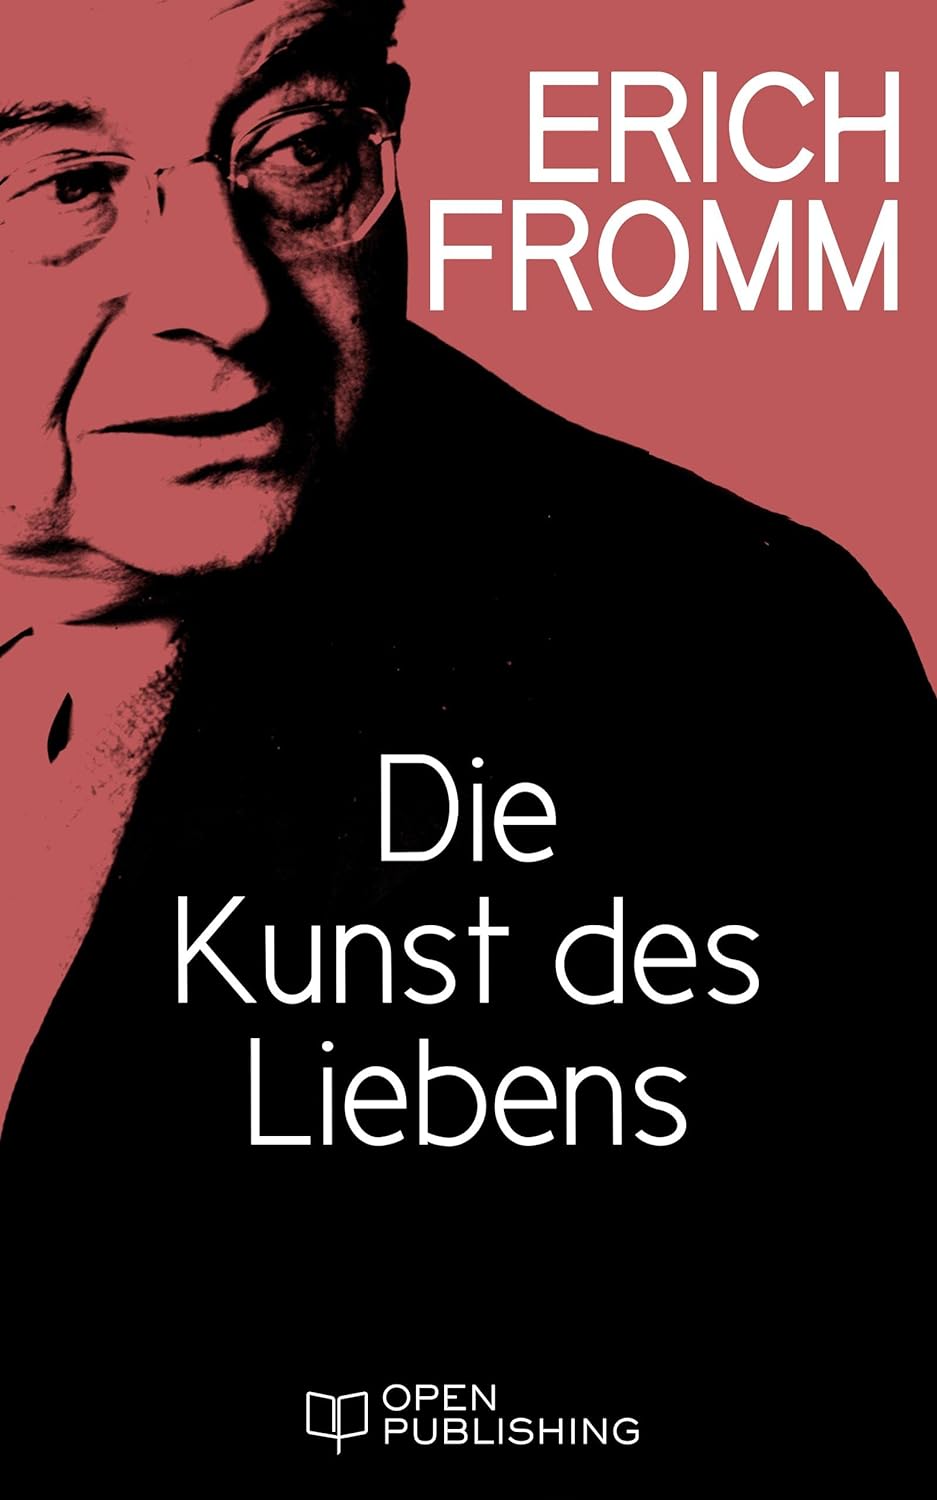 Die Kunst des Liebens: The Art of Loving. An Inquiry into the Nature of Love Buch von Erich Fromm